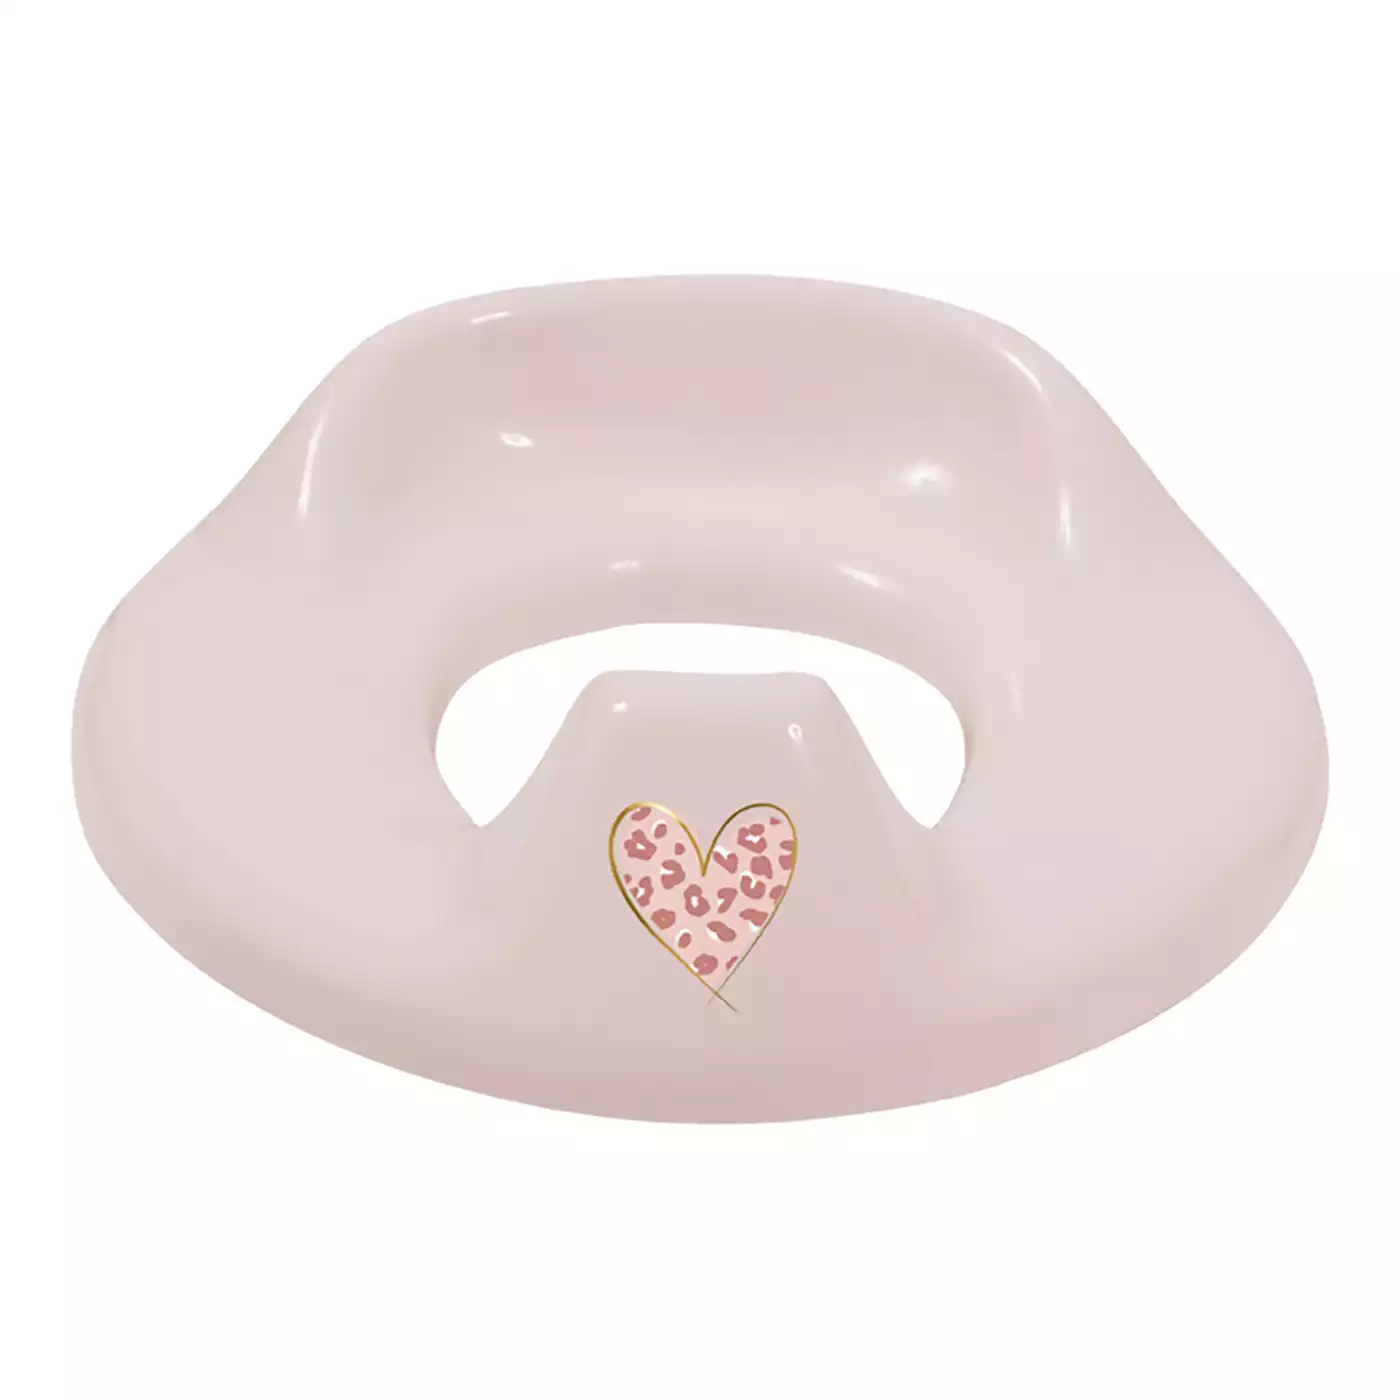 Toilettensitz Leopard Pink bébé-jou Rosa 2000577885503 1